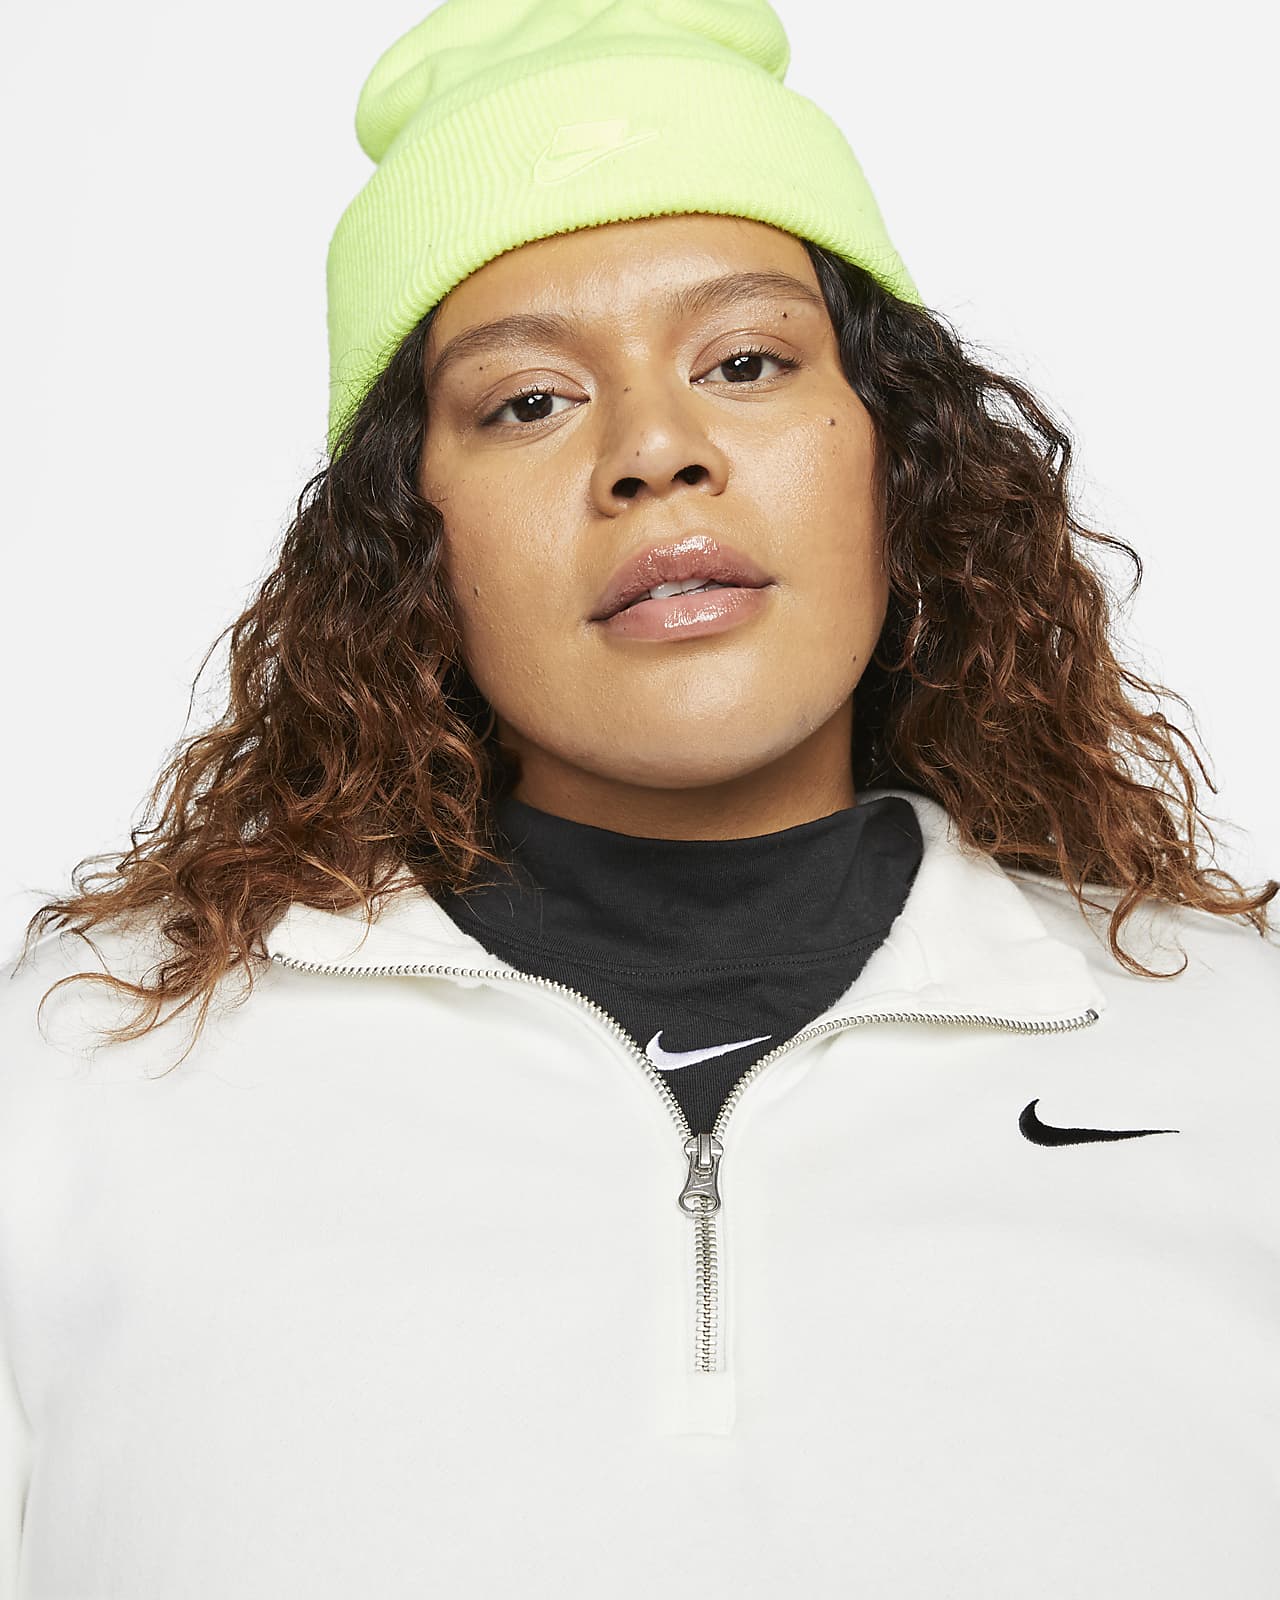 Nike Sportswear Phoenix Fleece Sudadera de chándal corta con media